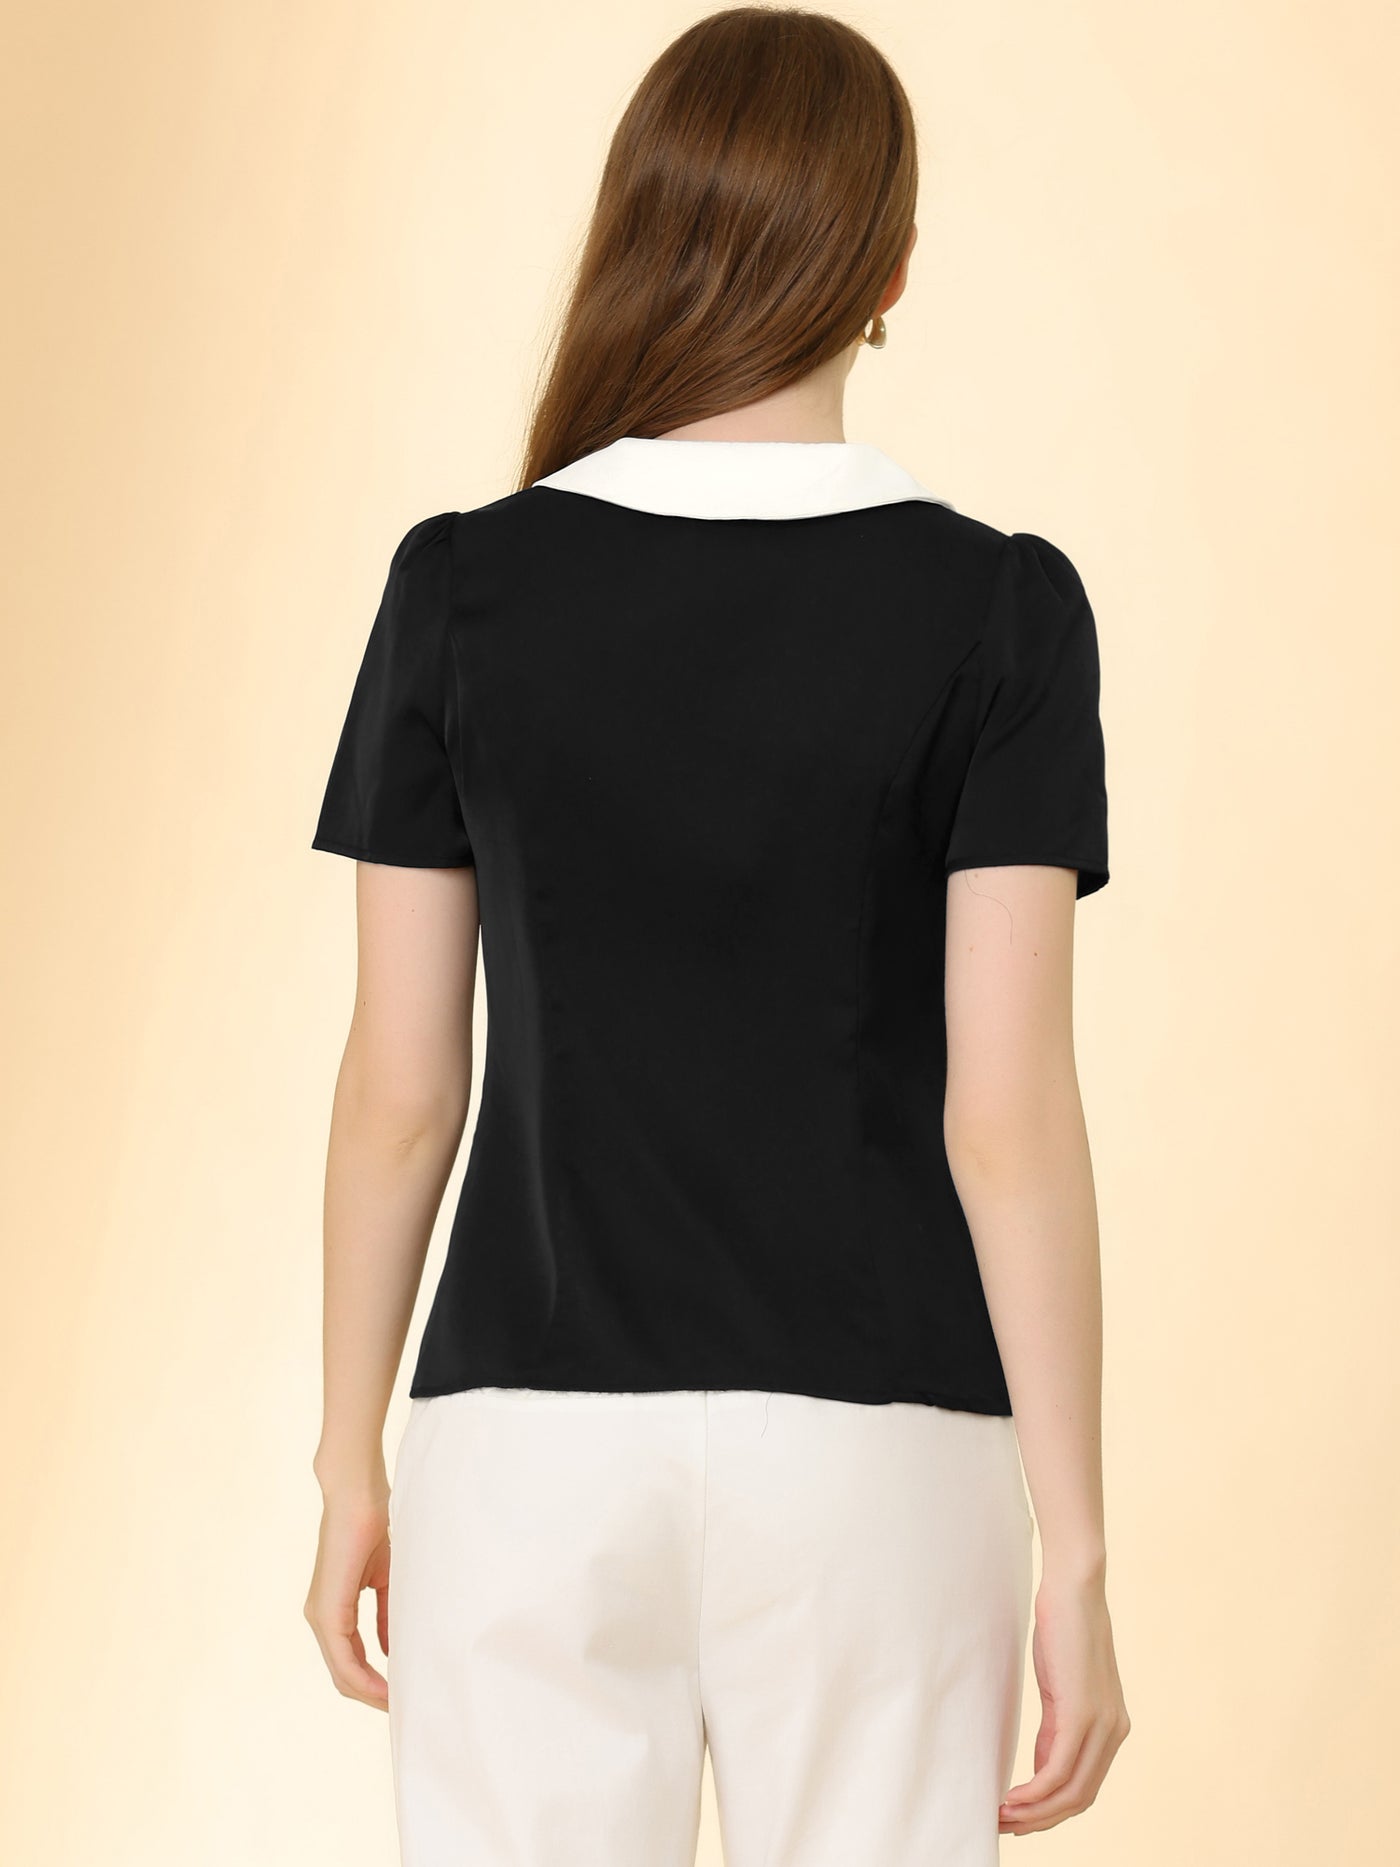 Allegra K Summer Tops for Office Contrast Collared Short Sleeve Button Up Shirt